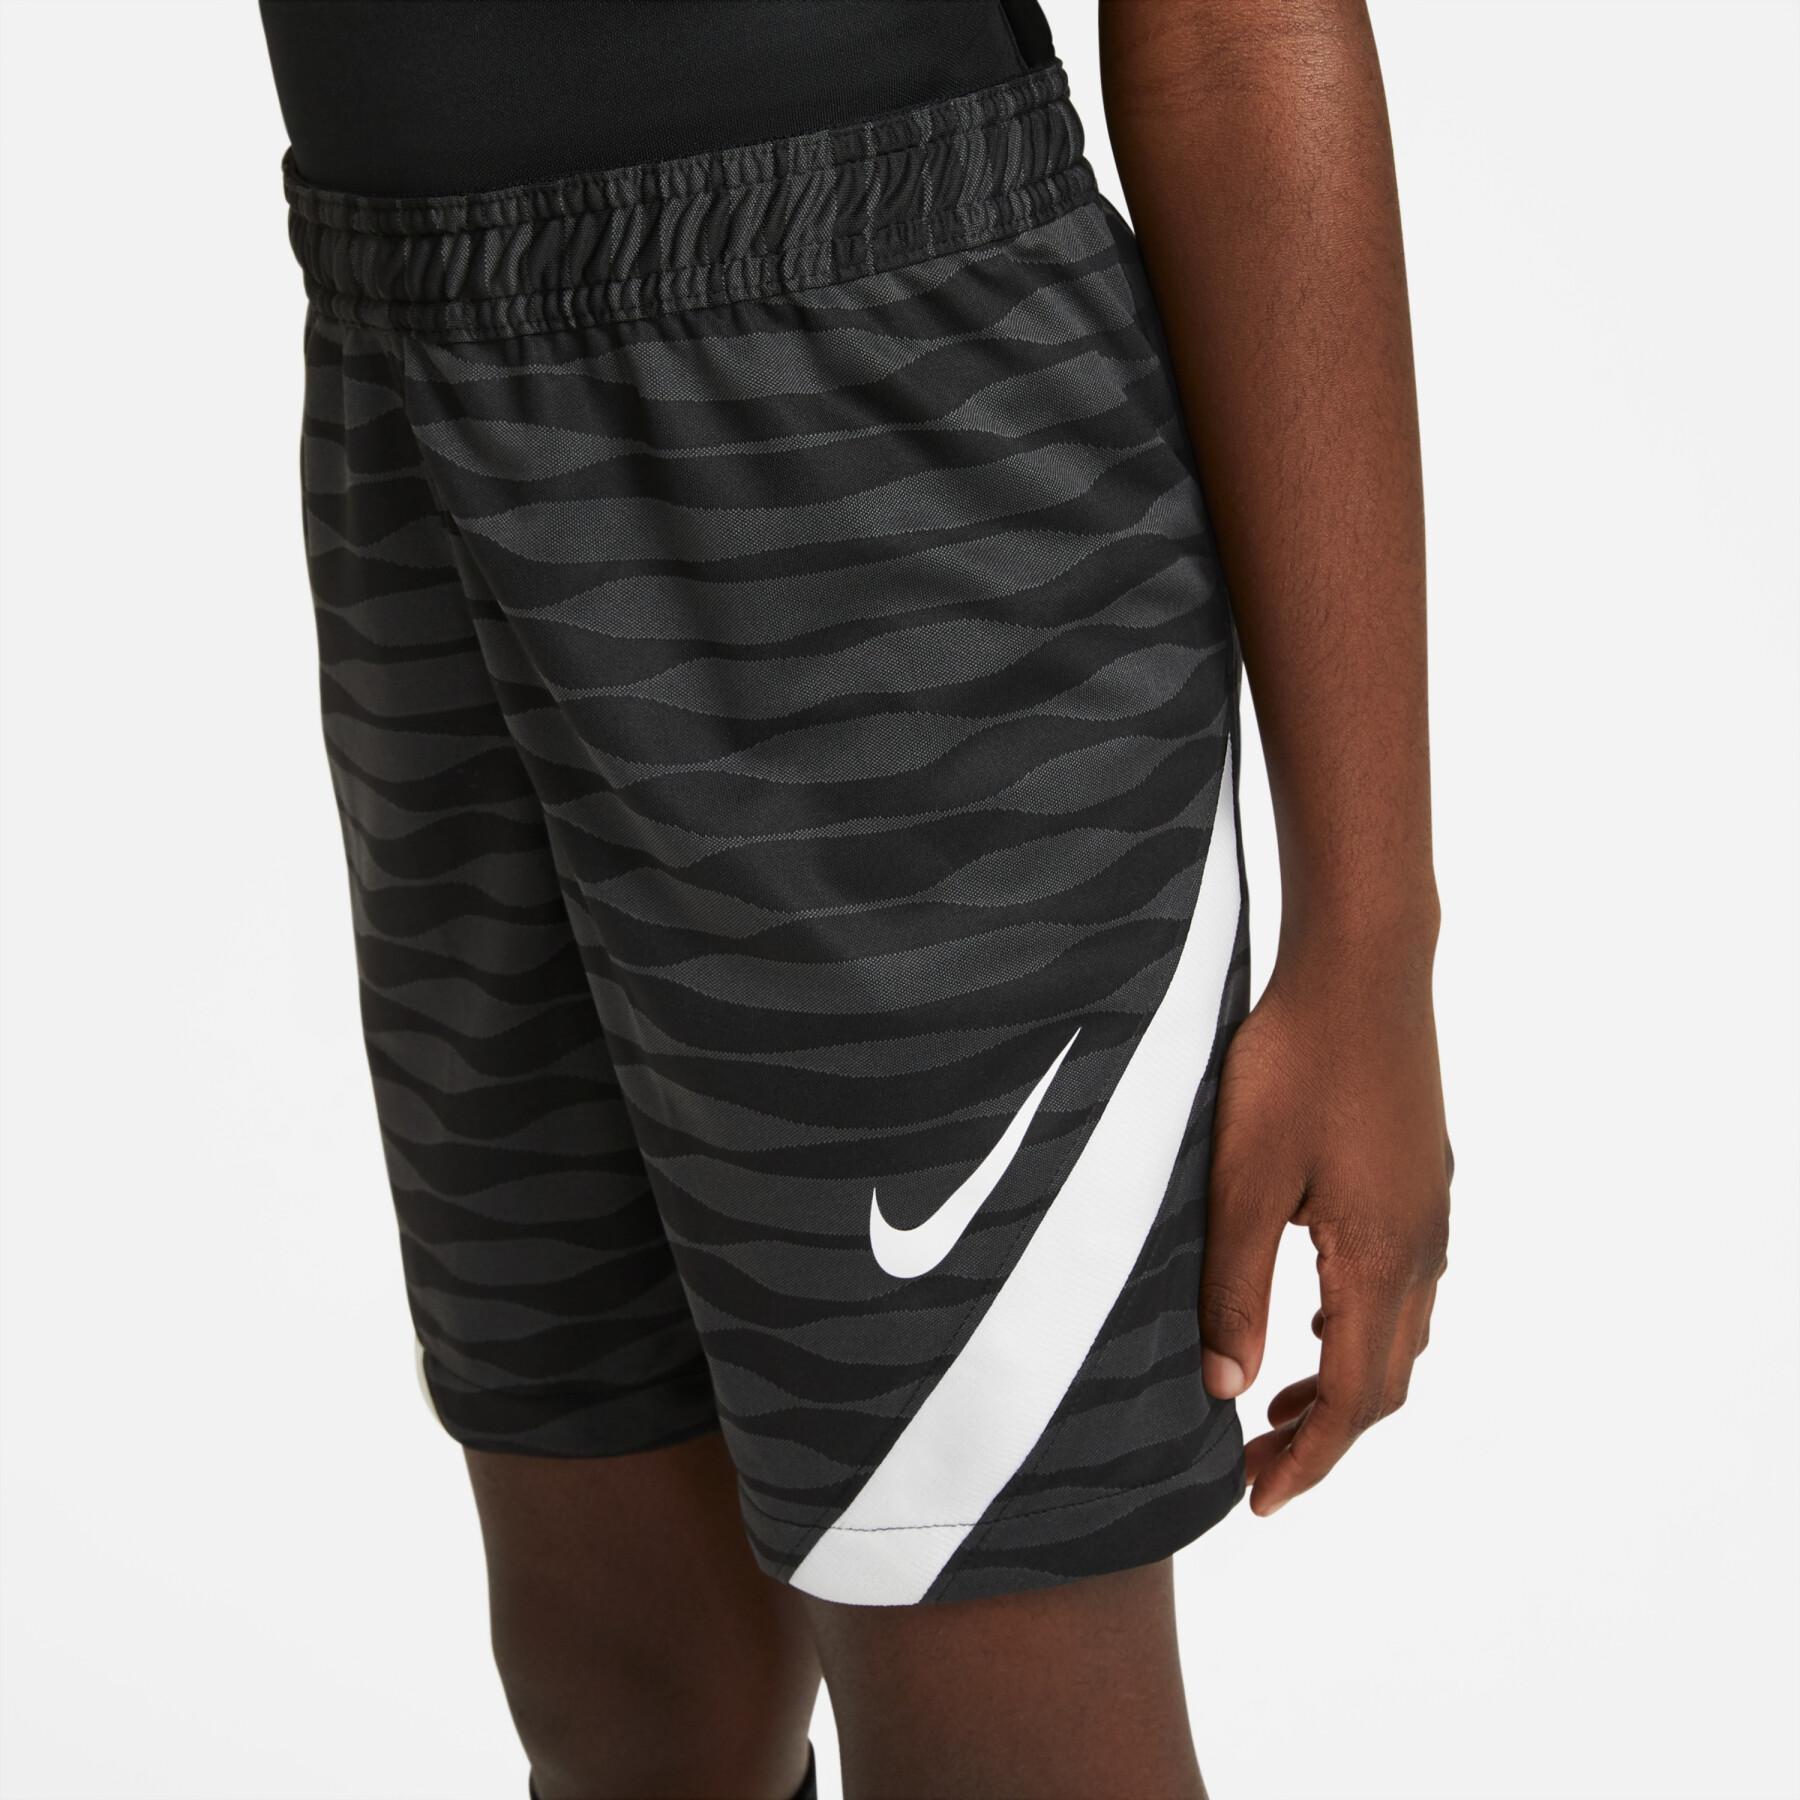 Kinder shorts Nike Dynamic Fit StrikeE21